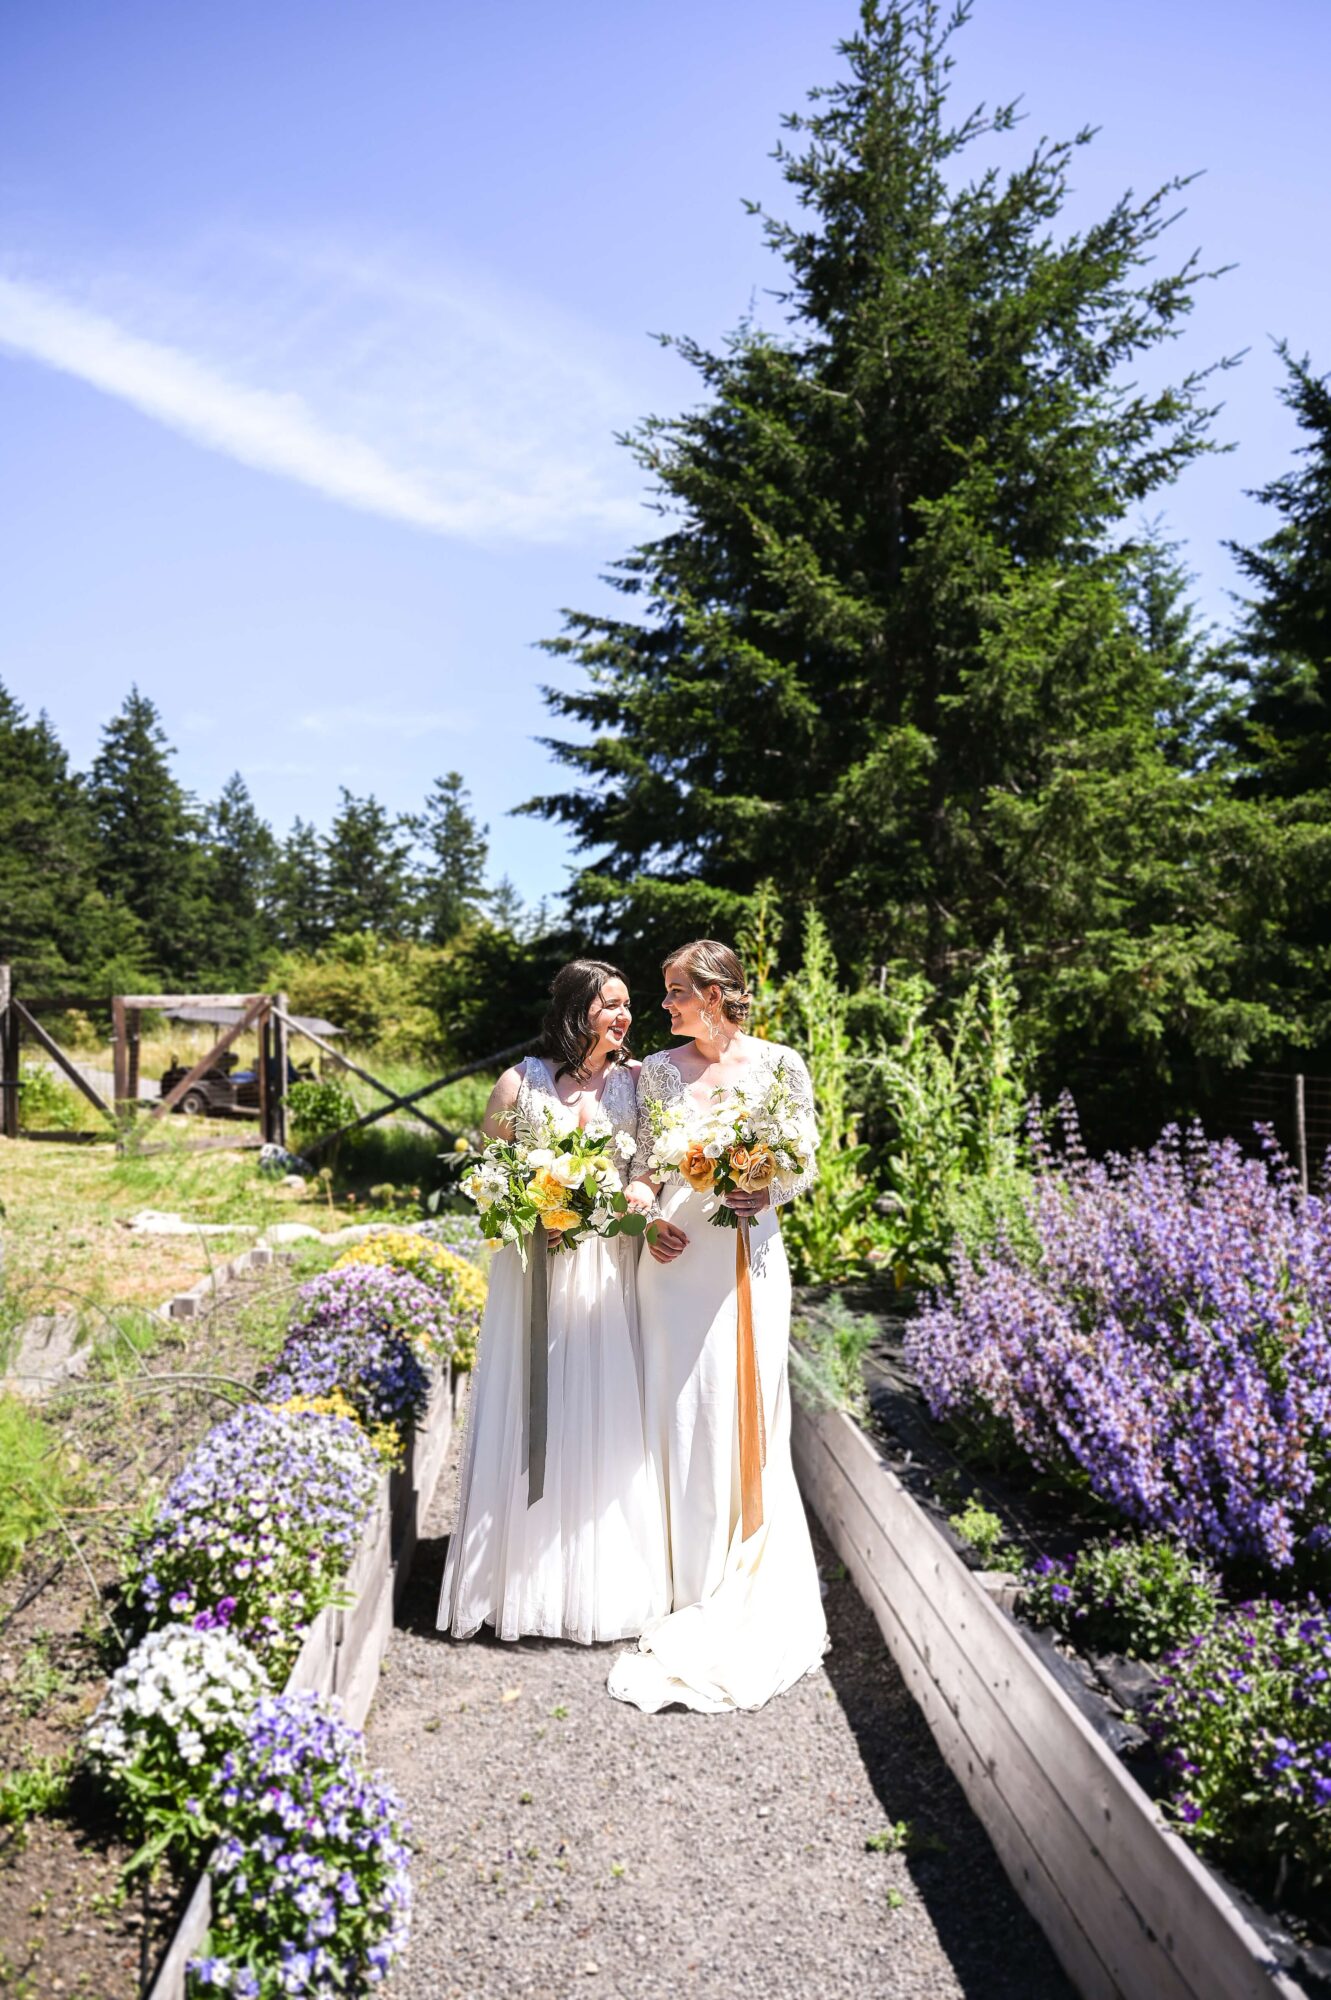 Two brides in the garden at their LGTBQ+ wedding at Saltwater farm on San Juan Island